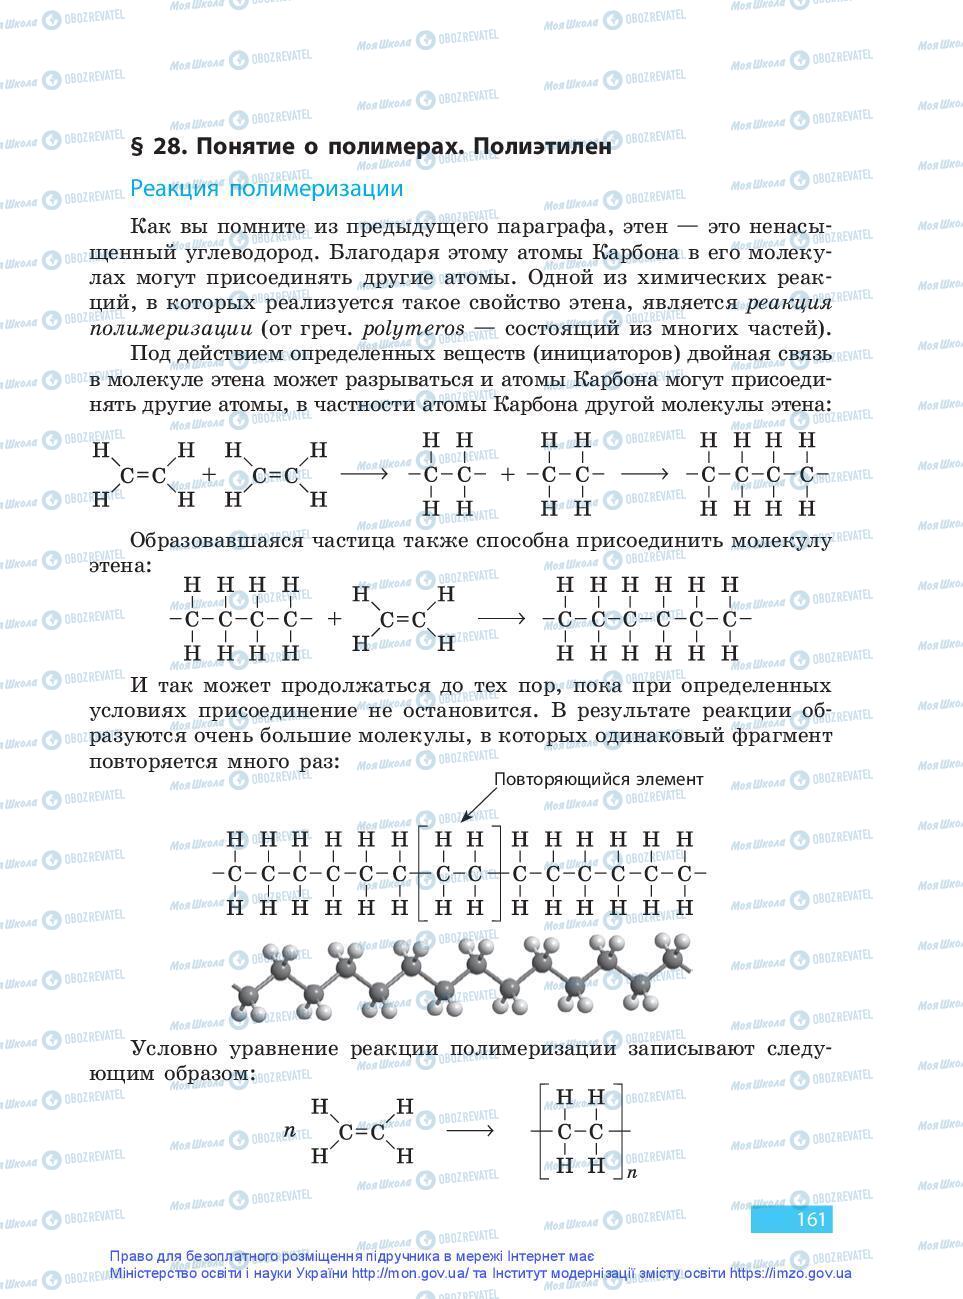 Учебники Химия 9 класс страница 161